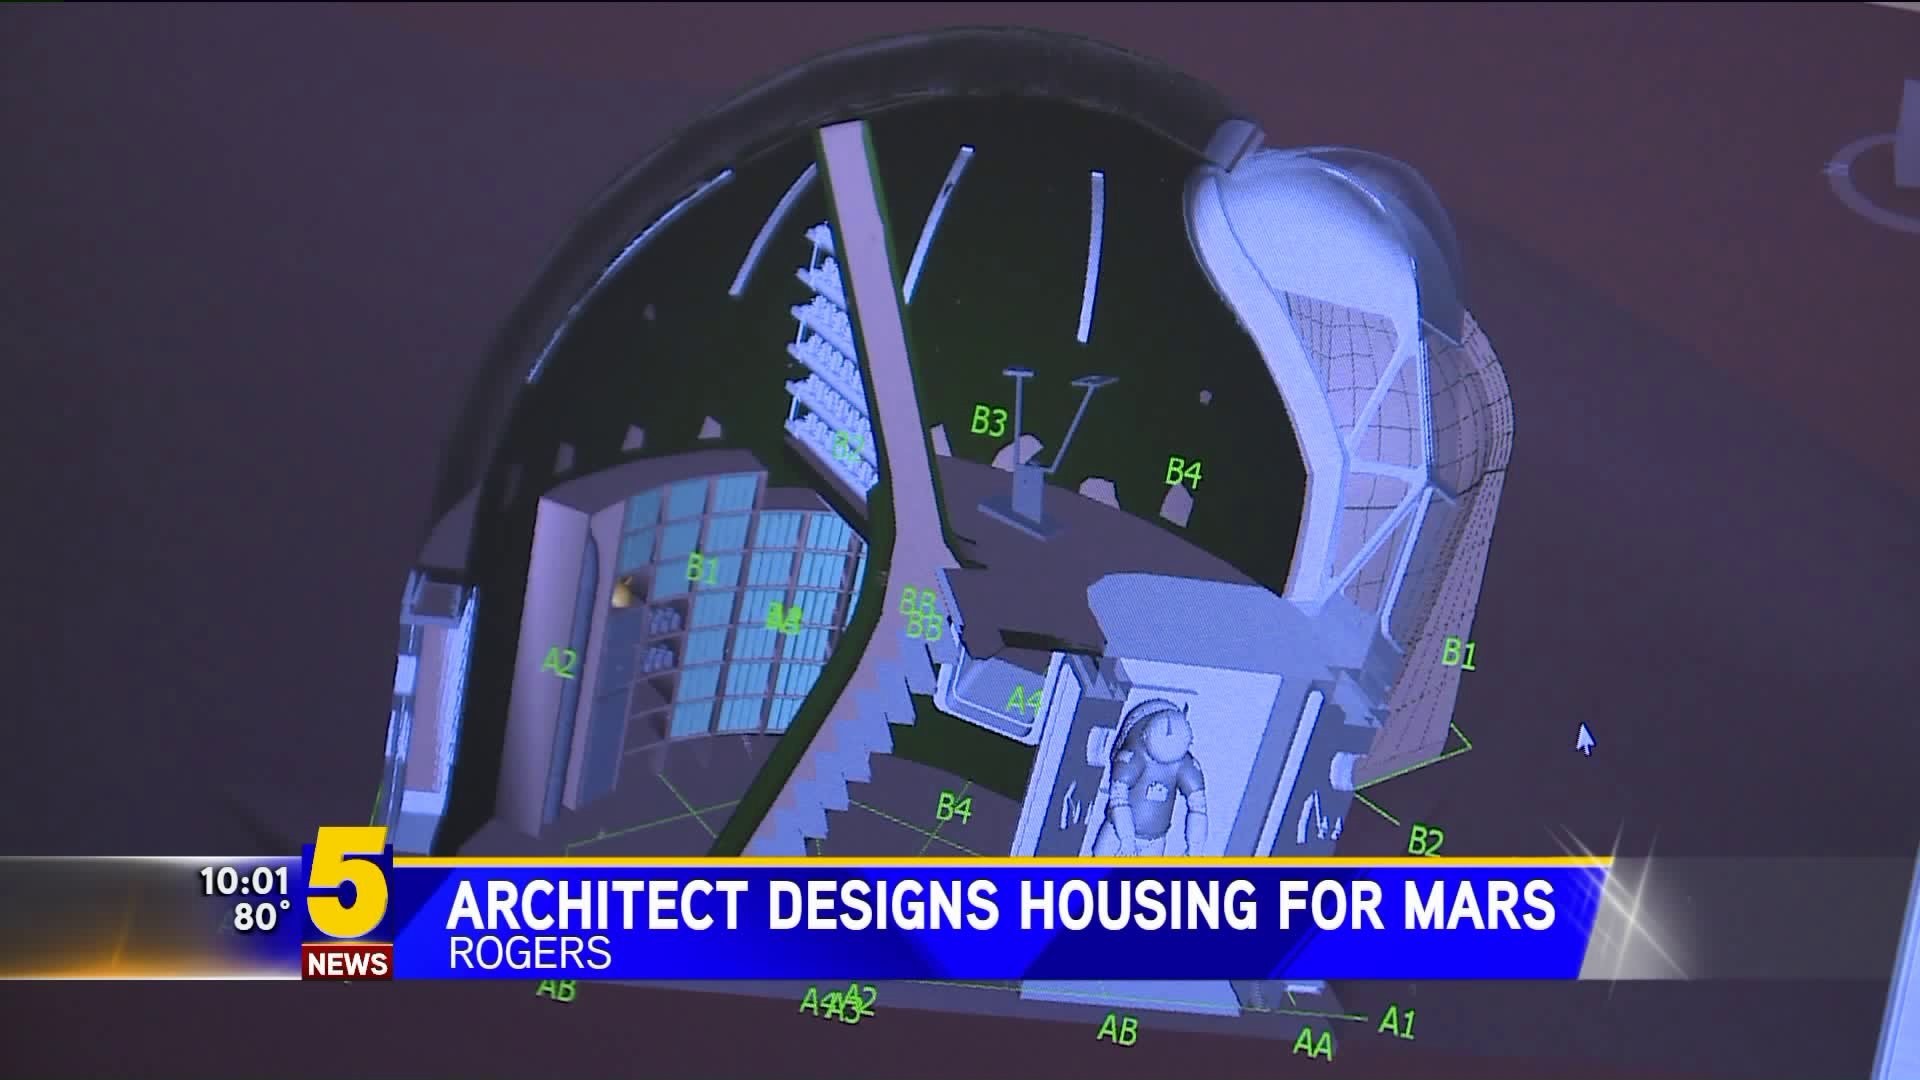 Rogers Architect Designs Housing On Mars